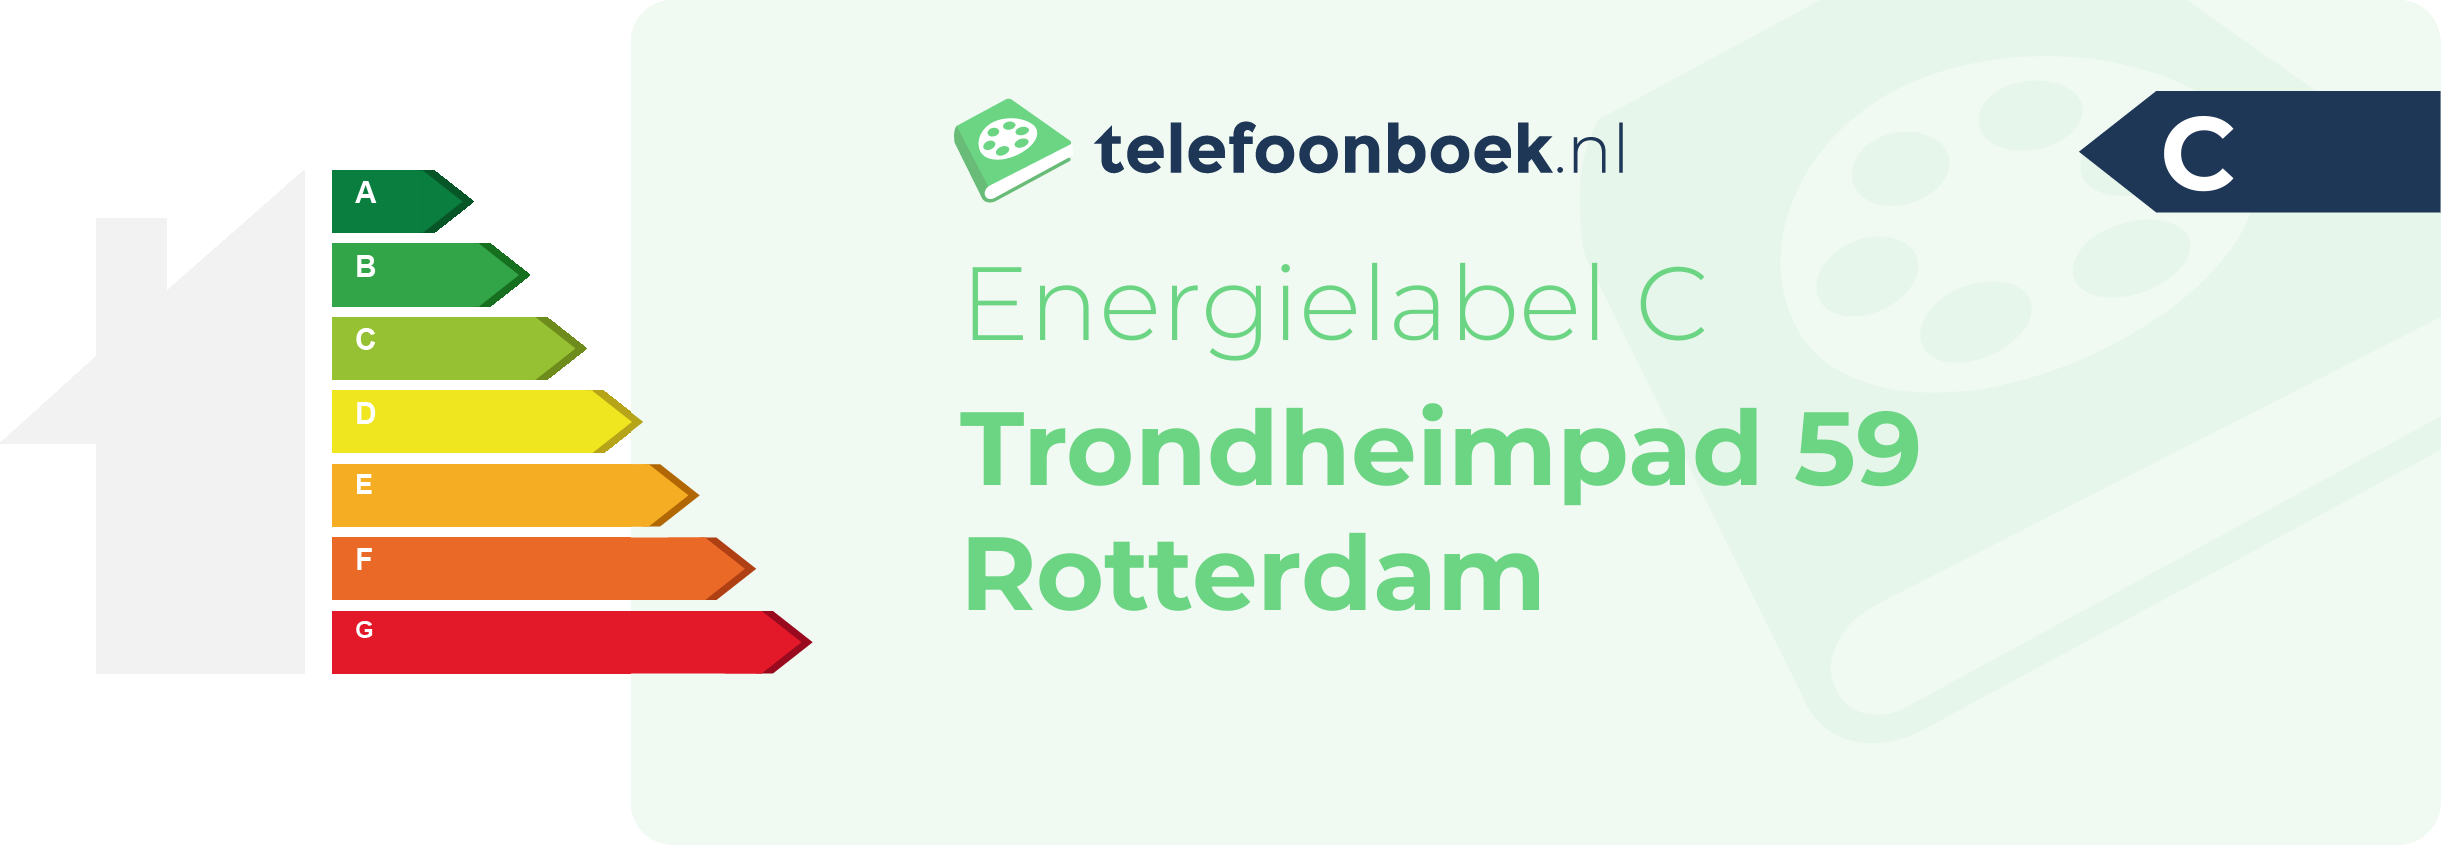 Energielabel Trondheimpad 59 Rotterdam